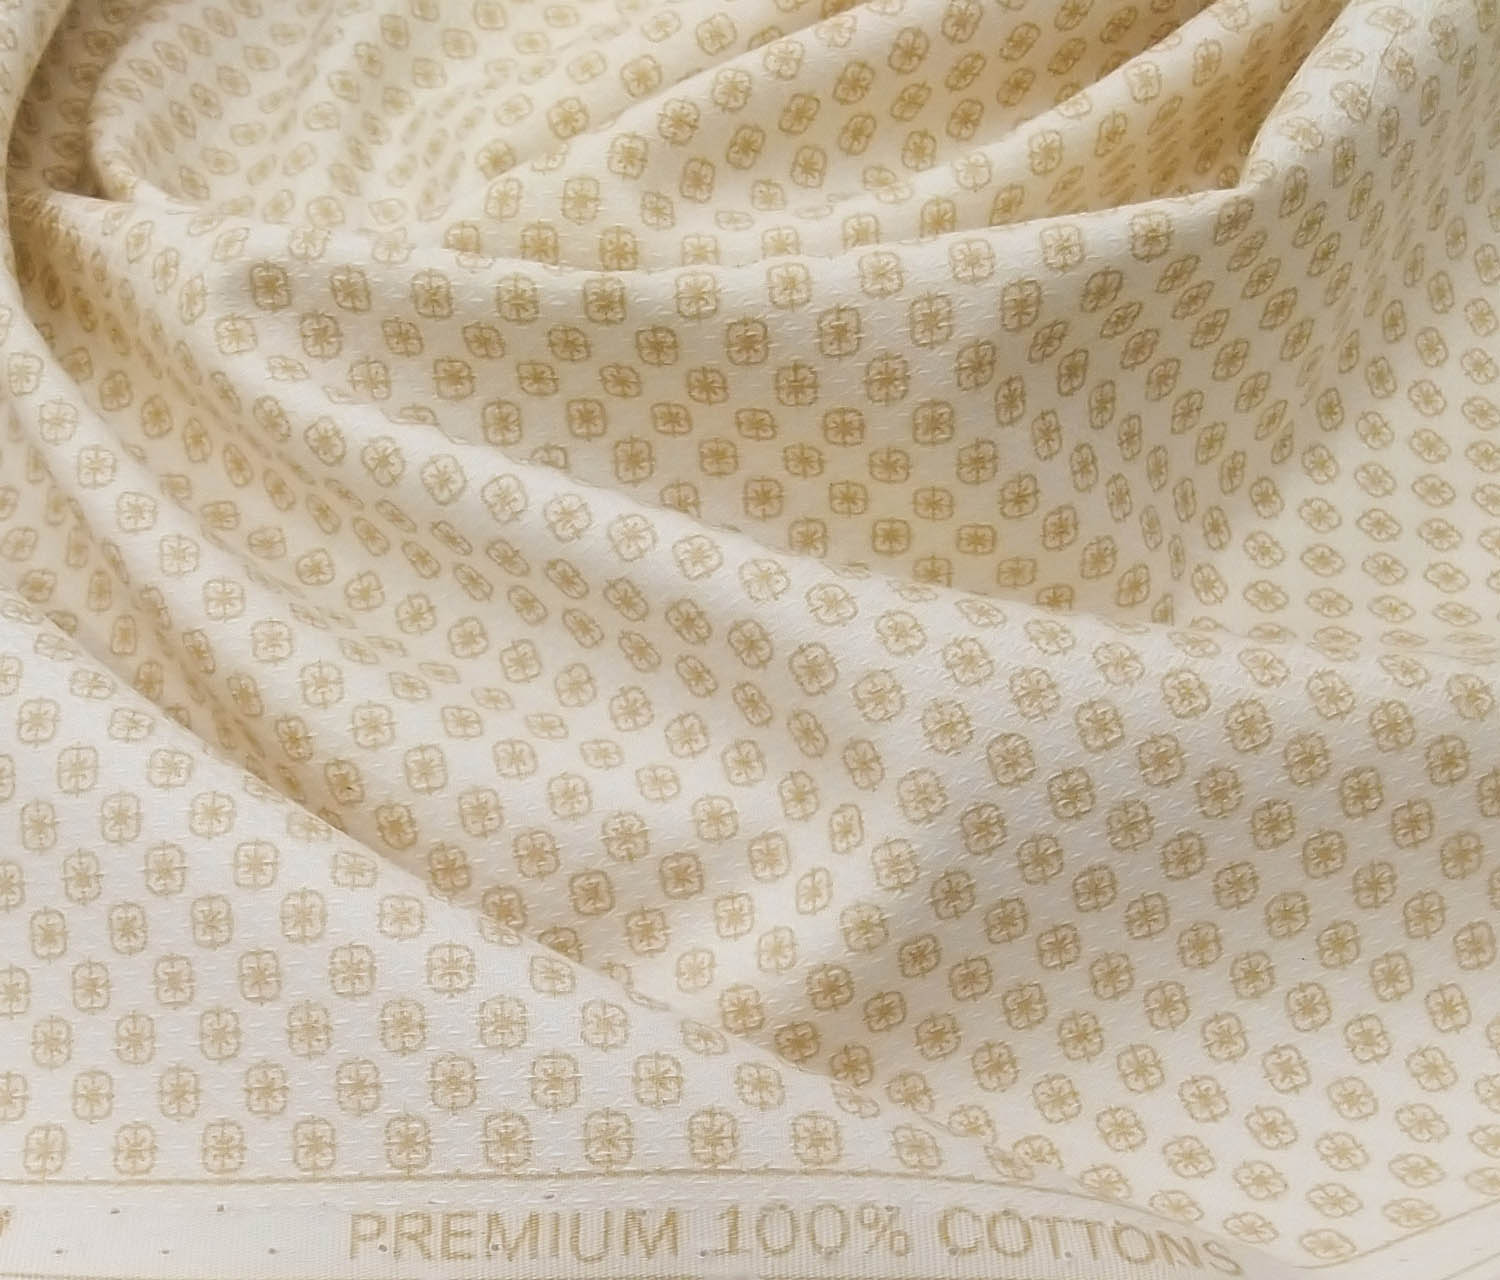 Monza Men's Cotton Structured Cum Printed 1.60 Meter Unstitched Shirt Fabric (Off White)